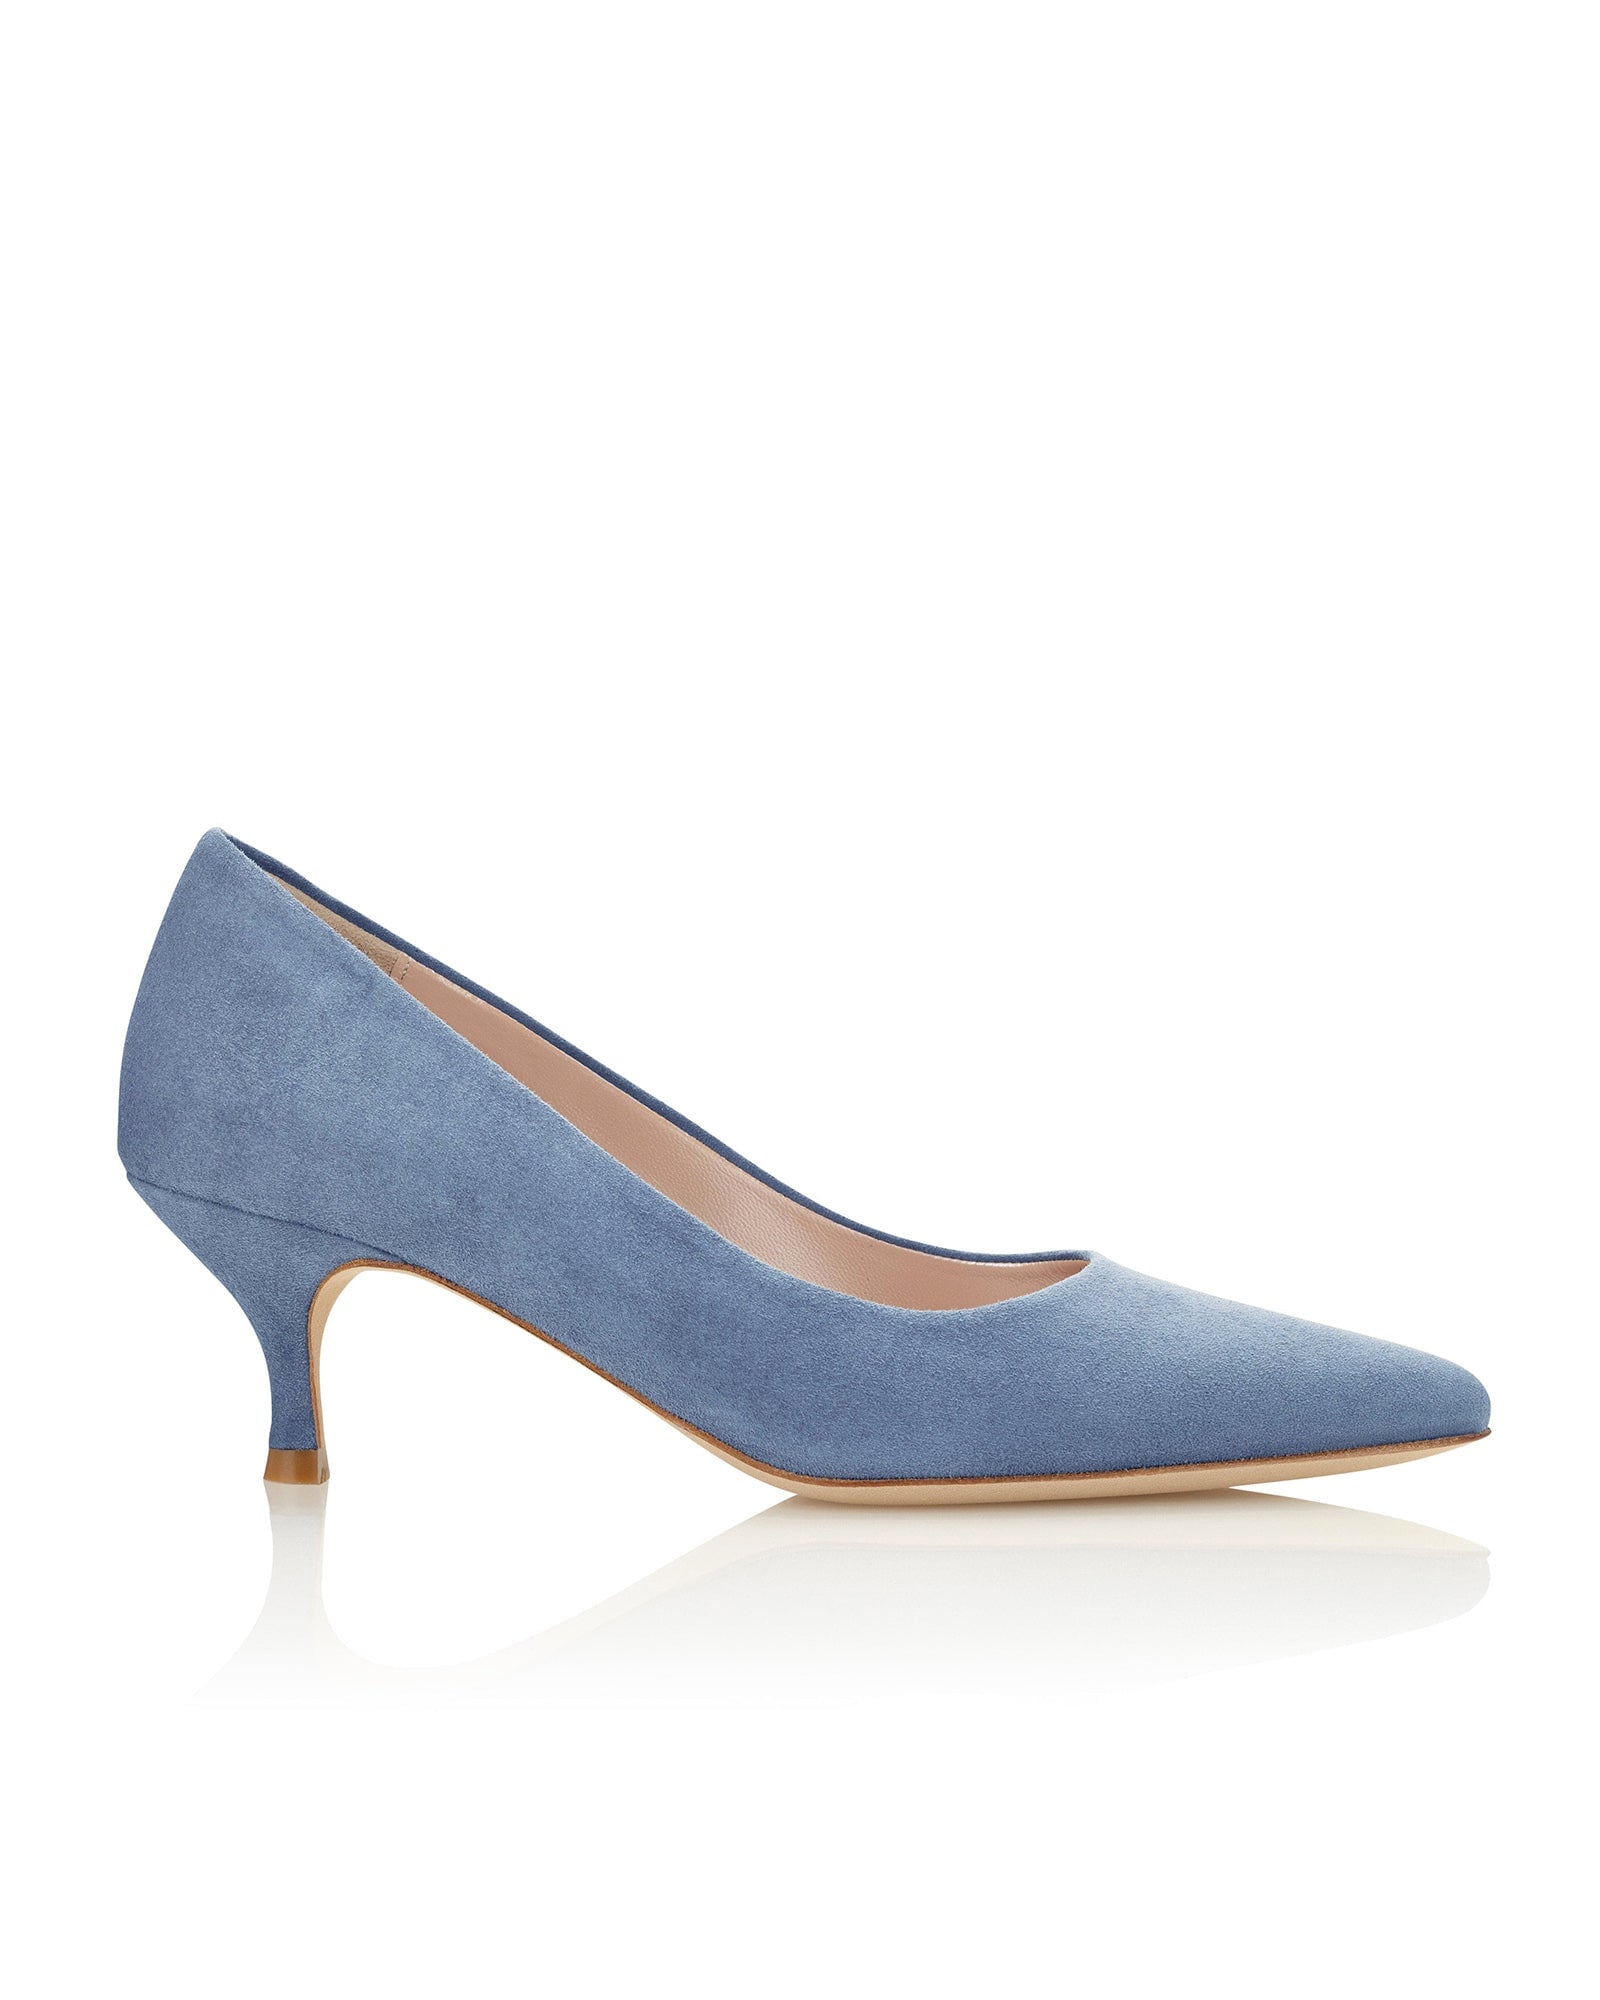 Olivia Kitten Powder Blue Bridal Shoe Pointed Light Blue Court Shoes  image